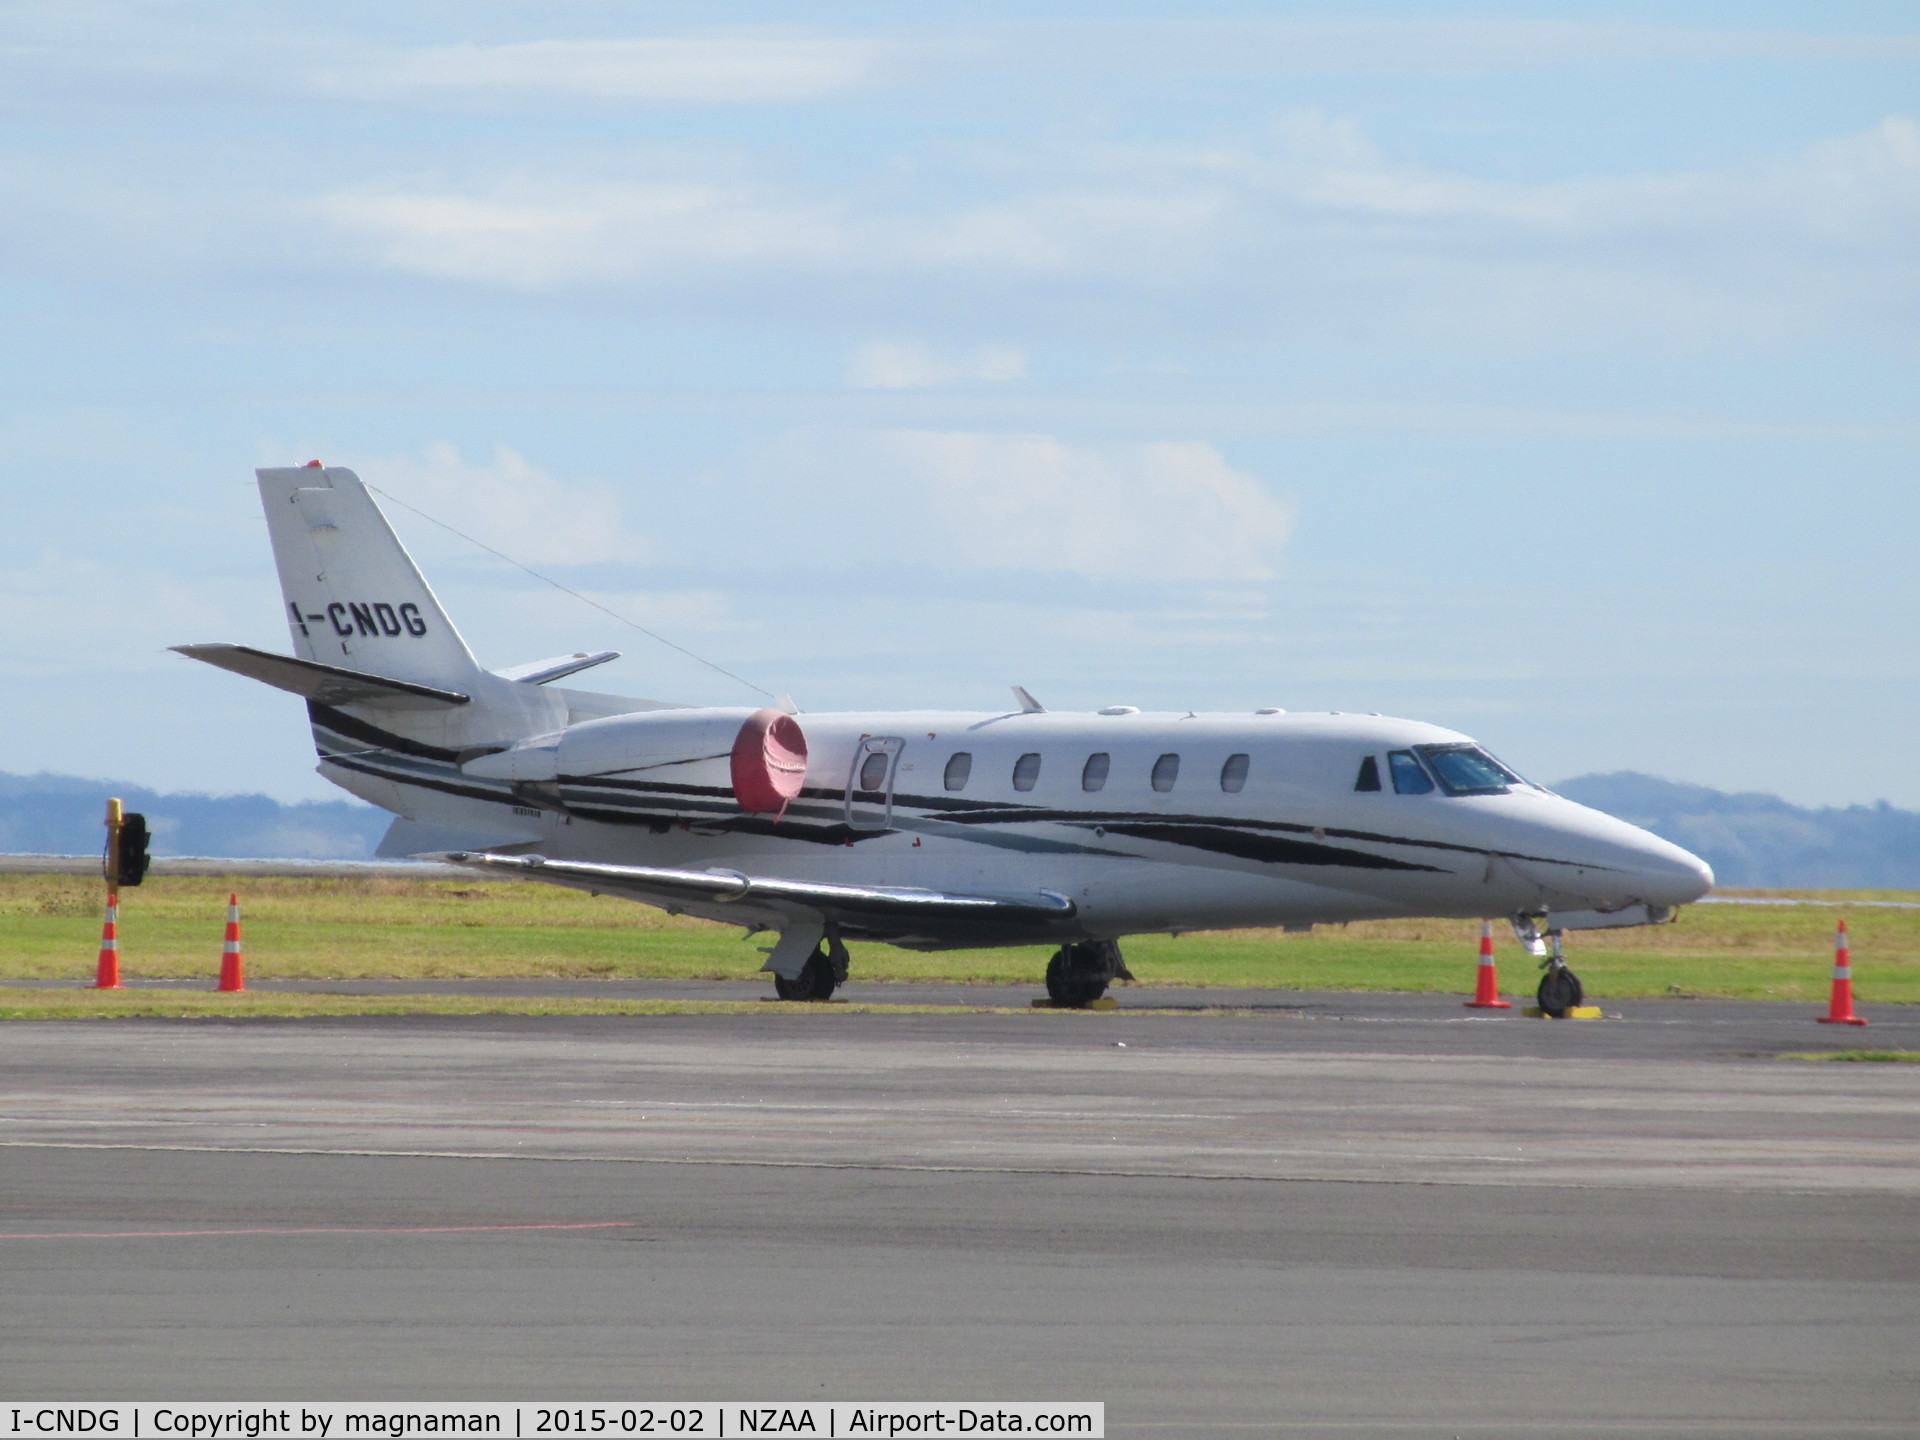 I-CNDG, 2009 Cessna 560XL Citation XLS+ C/N 560-6045, Nice visitor down under - arrived from Sydney today.